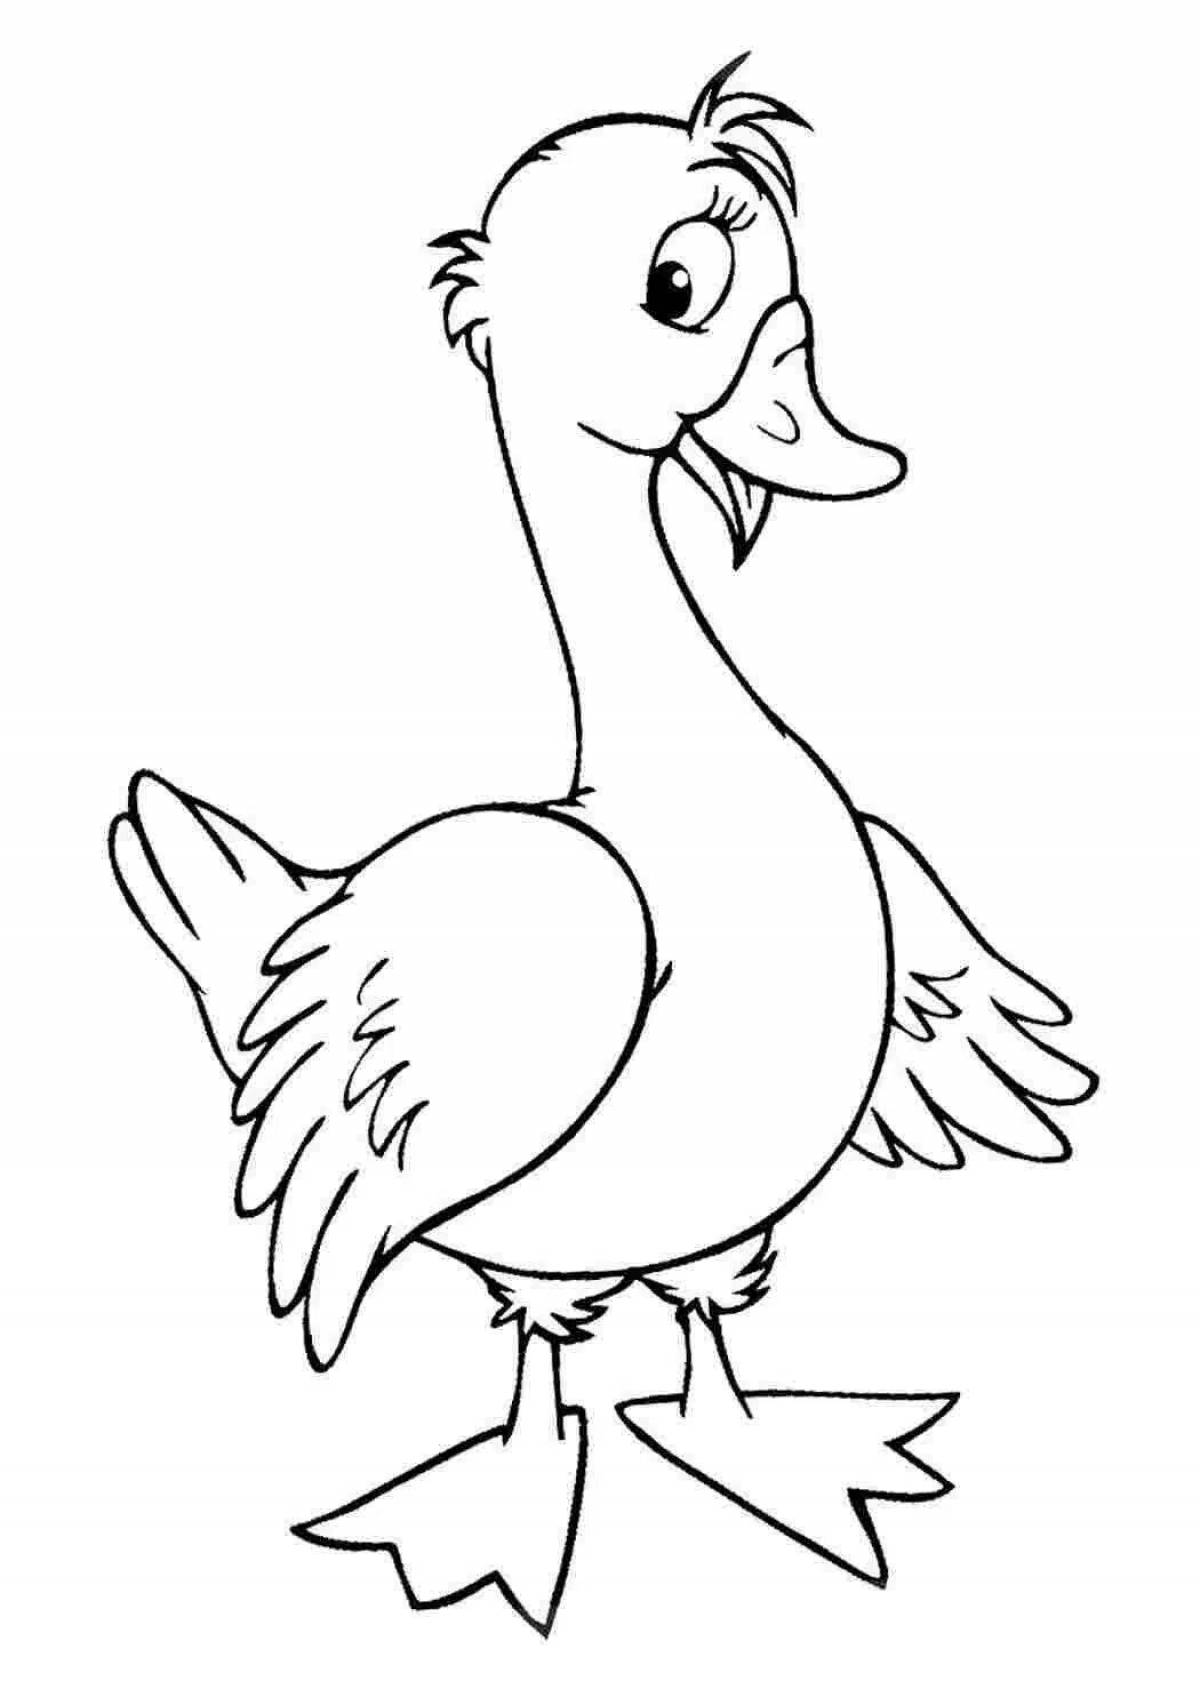 Joyful gosling coloring page